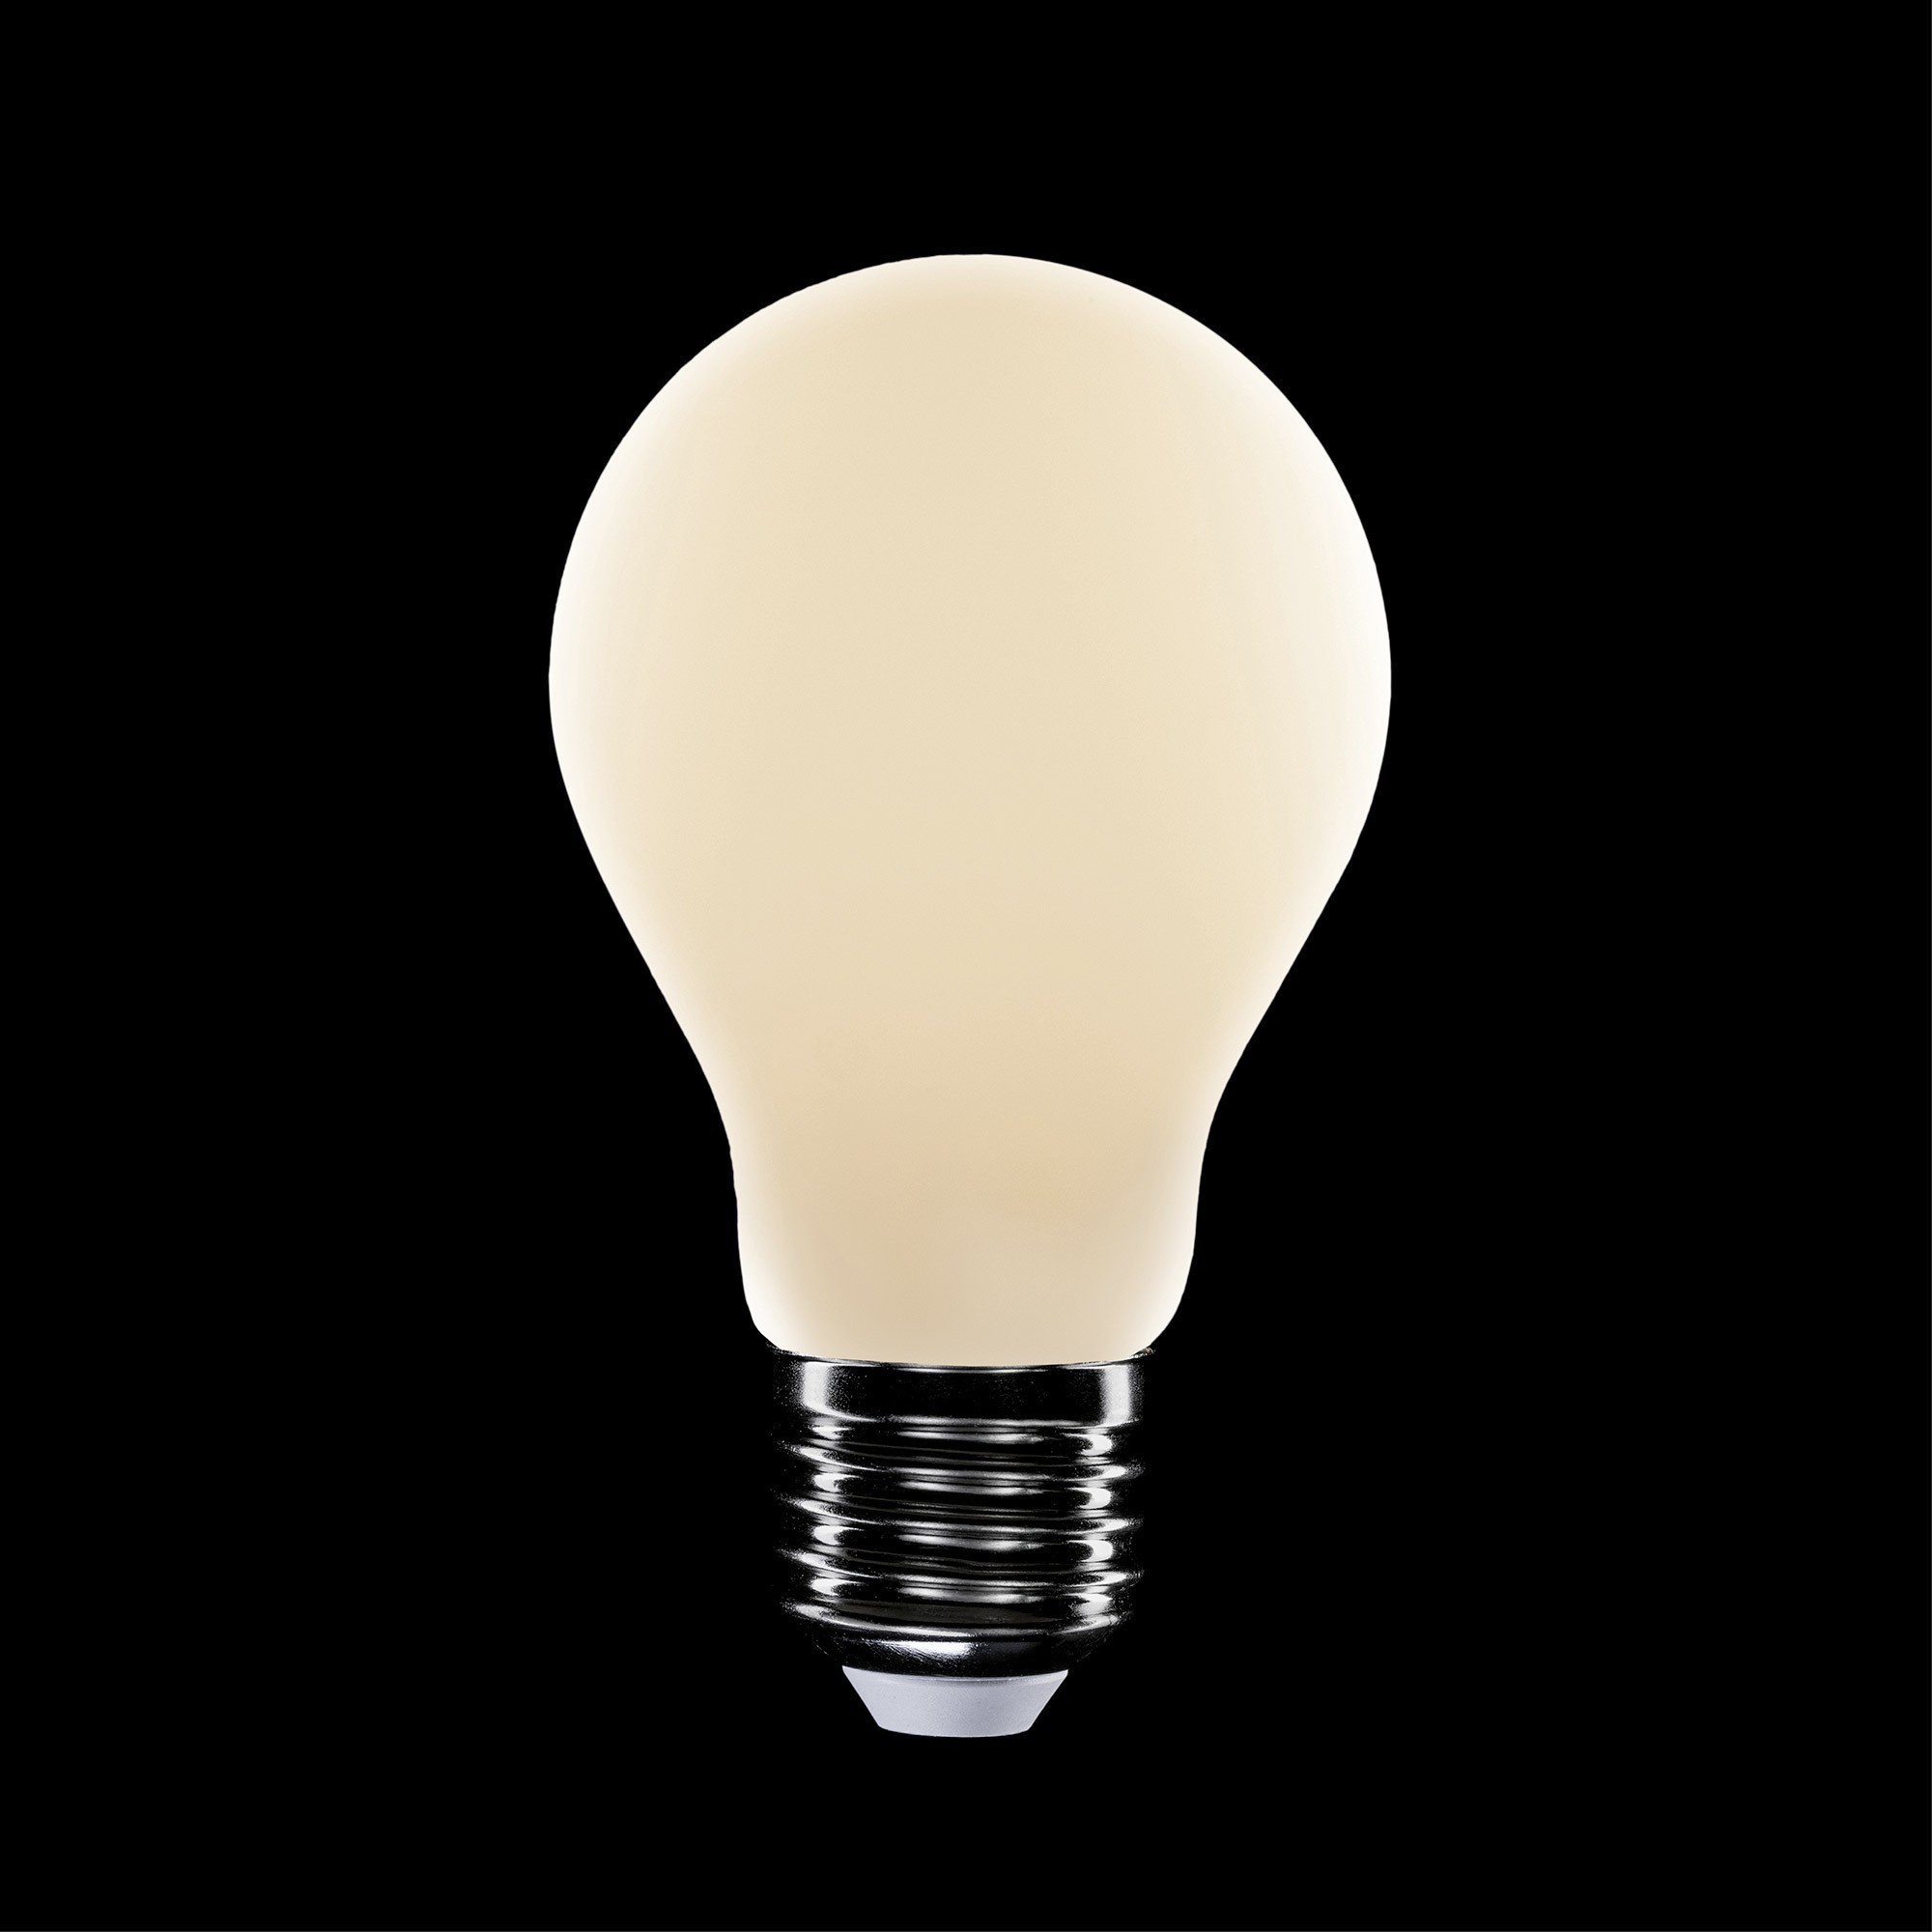 P06 - LED Light Bulb A60, E27, 7W, 2700K, 640Lm,  porcelain effect